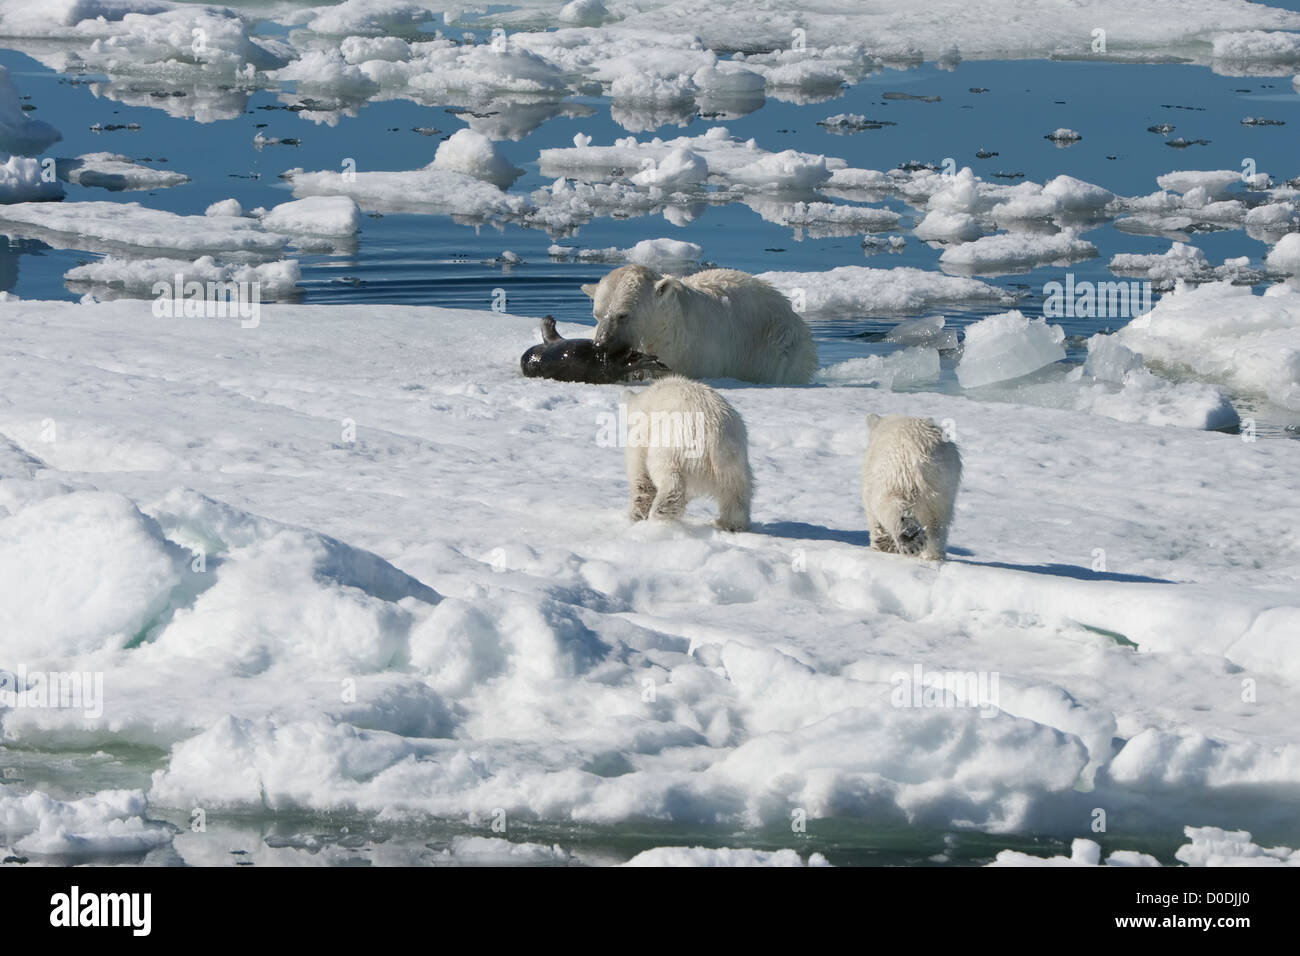 Female Polar bear (Ursus maritimus) hunting a ringed seal, Svalbard Archipelago, Barents Sea, Norway Stock Photo